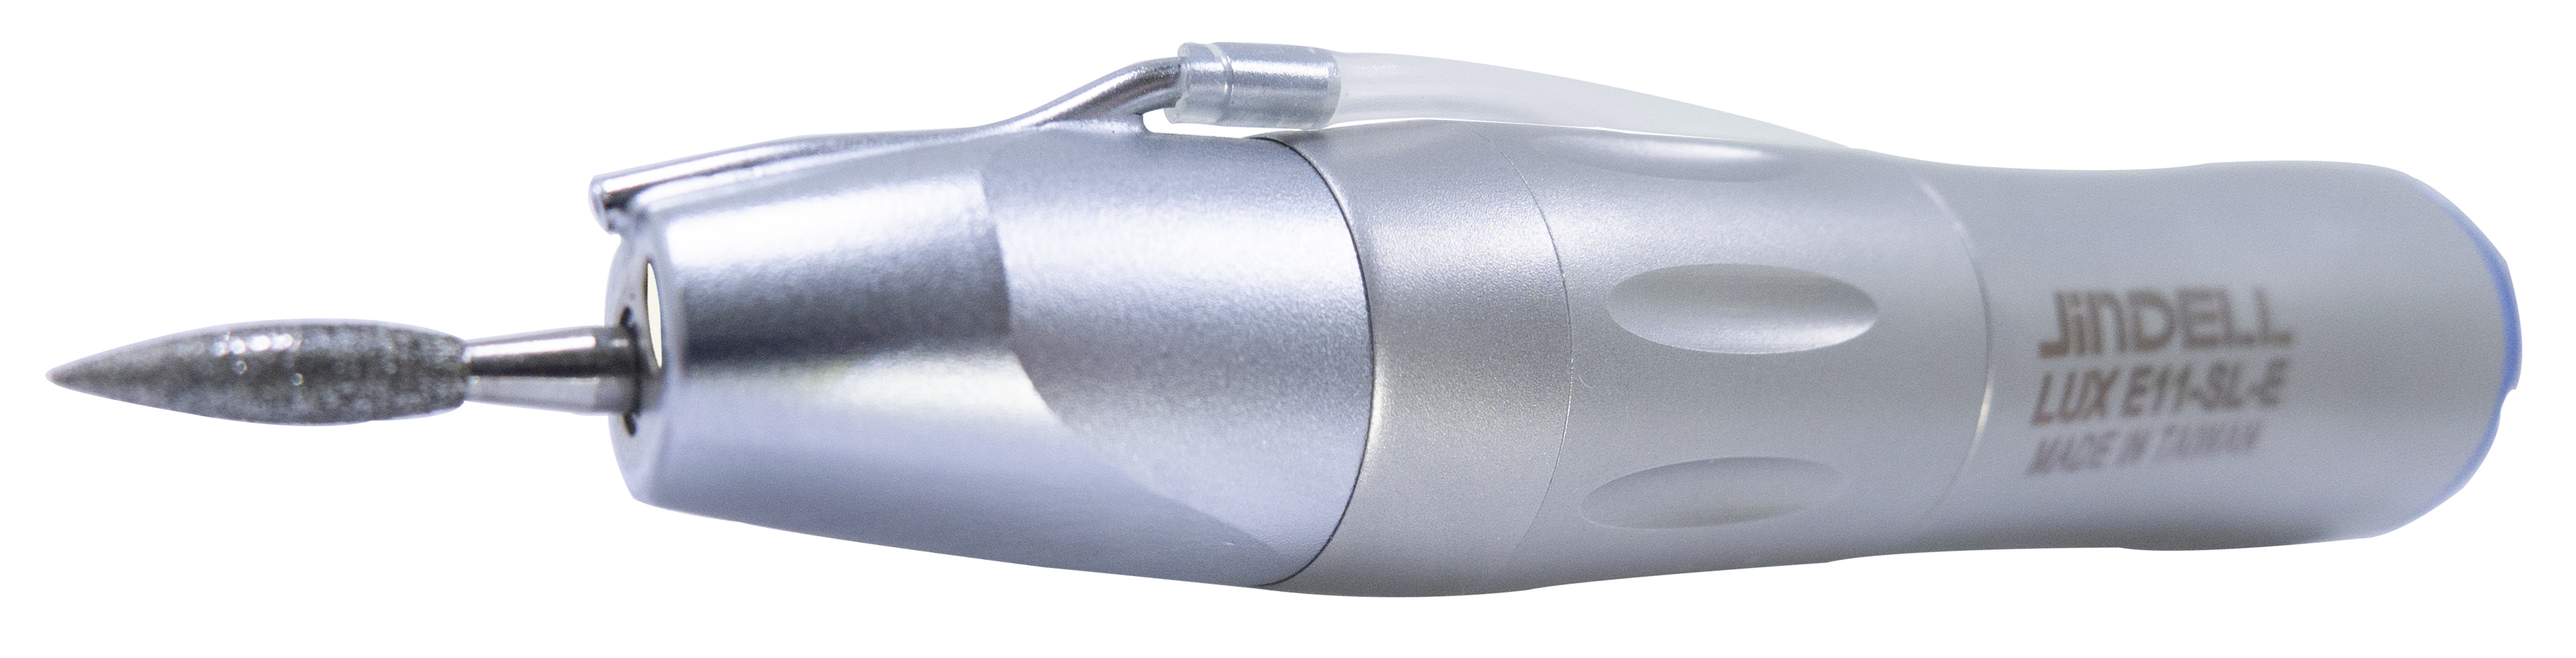 1:1 Internal Water Spray Dental Contra Angle Handpiece Push Button